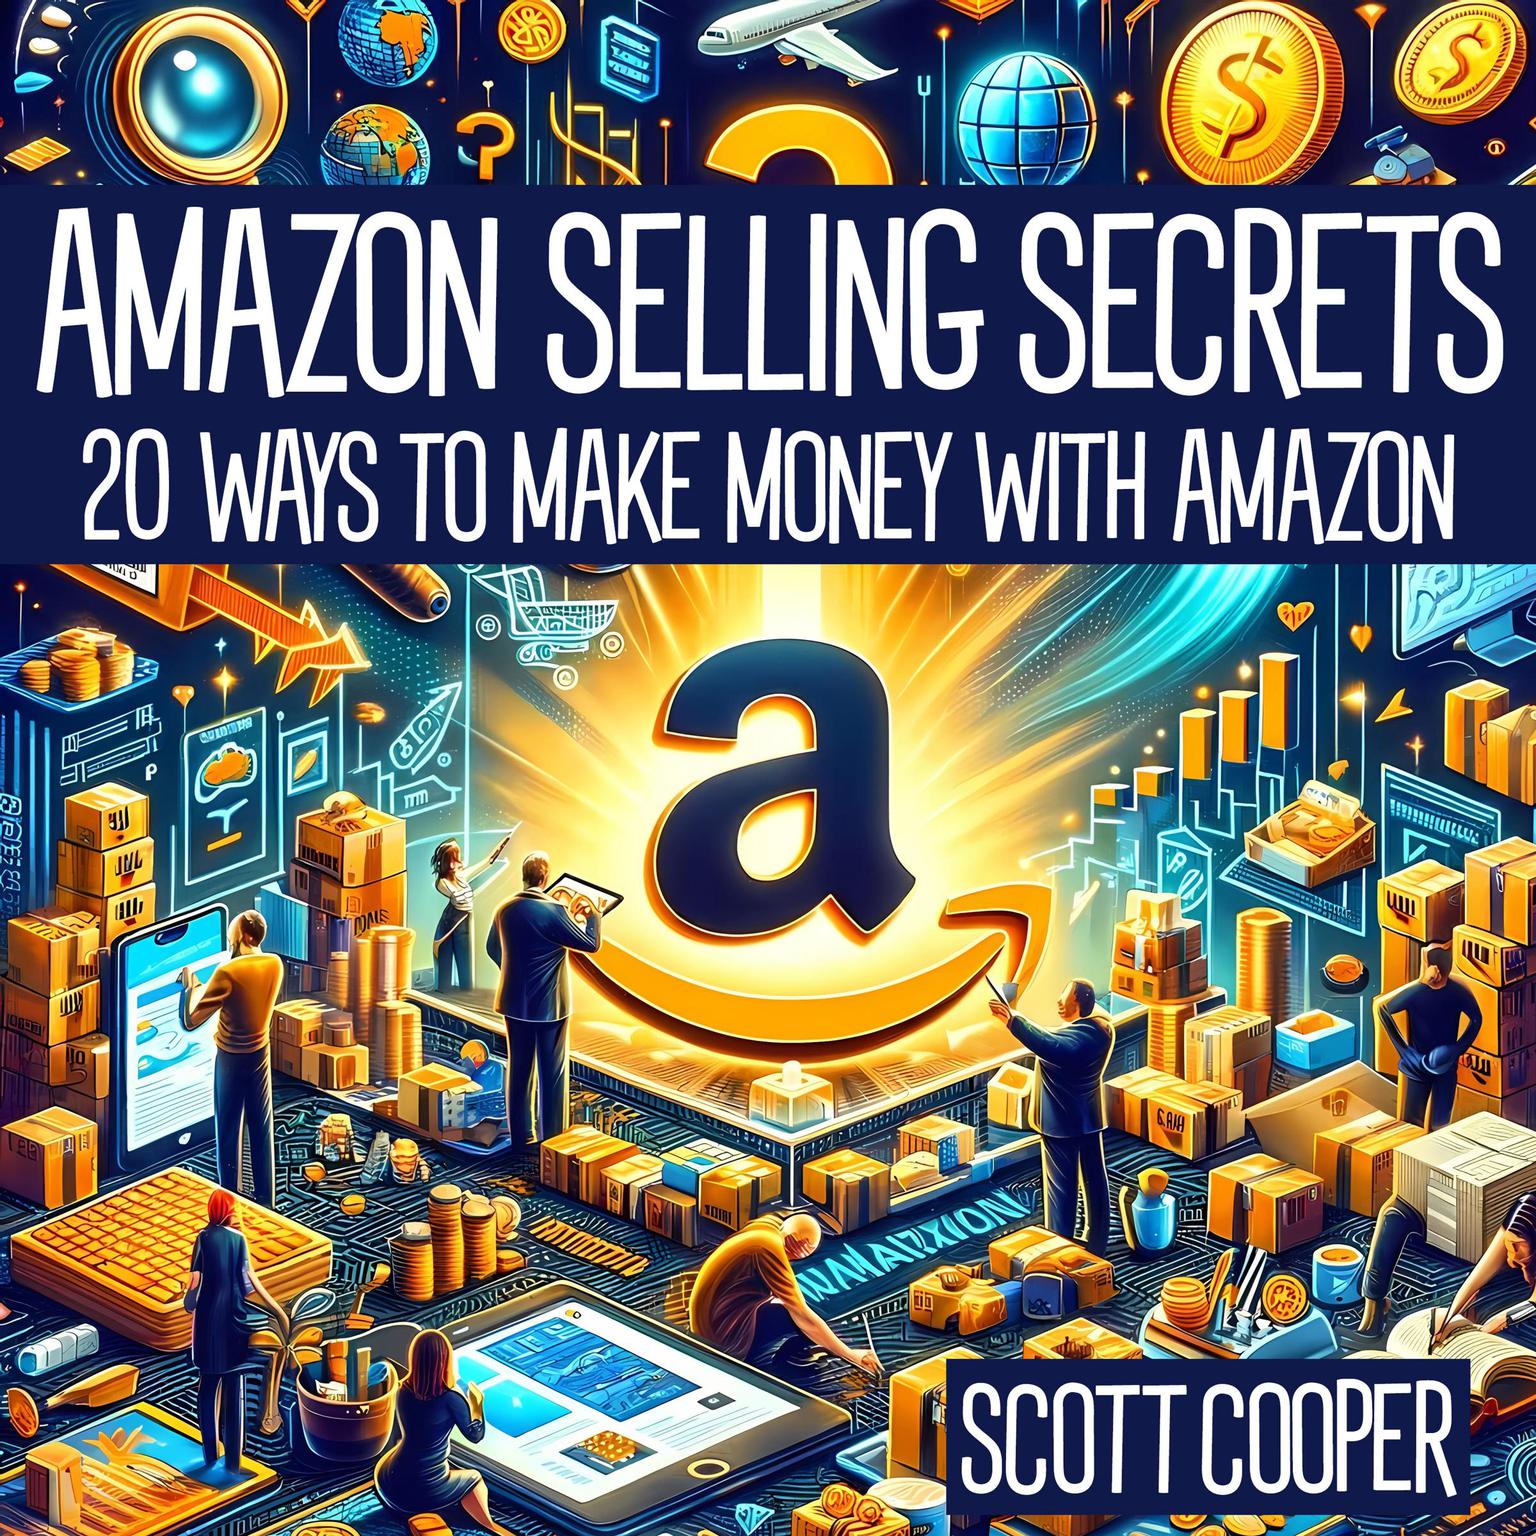 Amazon Selling Secrets: 20 Ways to Make Money with Amazon Audiobook, by Scott Cooper